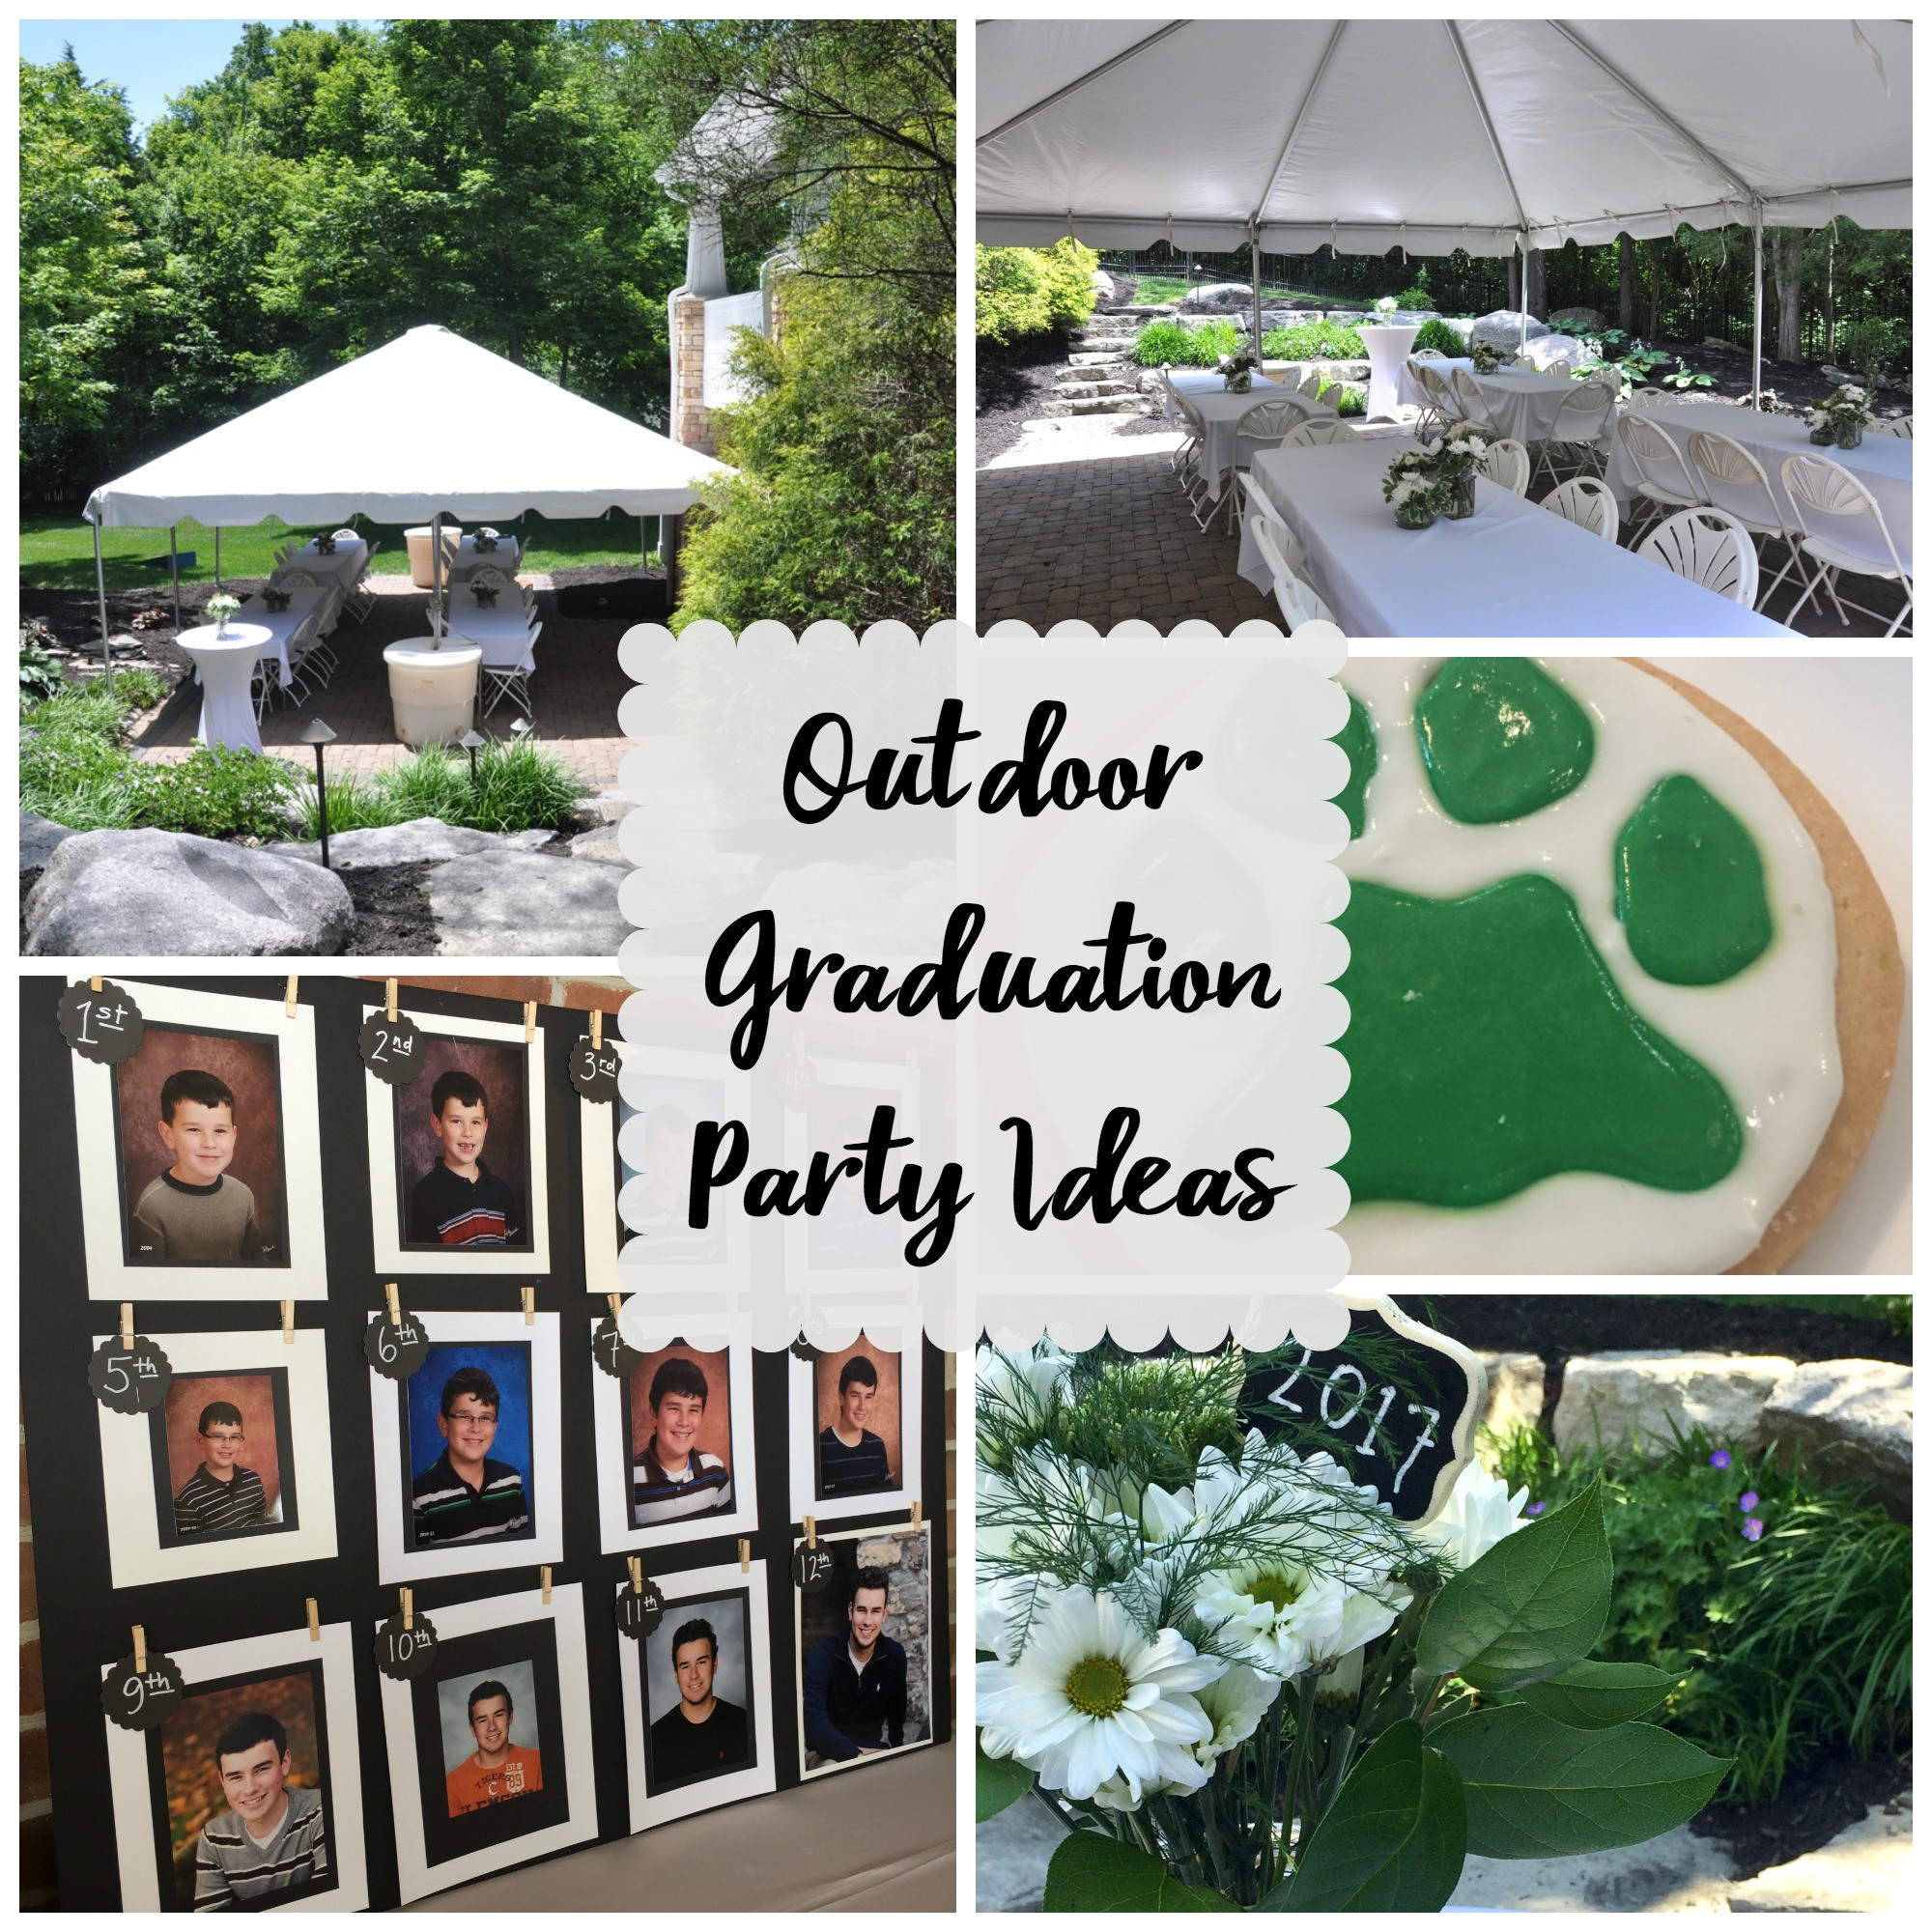 Backyard Graduation Party Menu Ideas
 Outdoor Graduation Party Evolution of Style